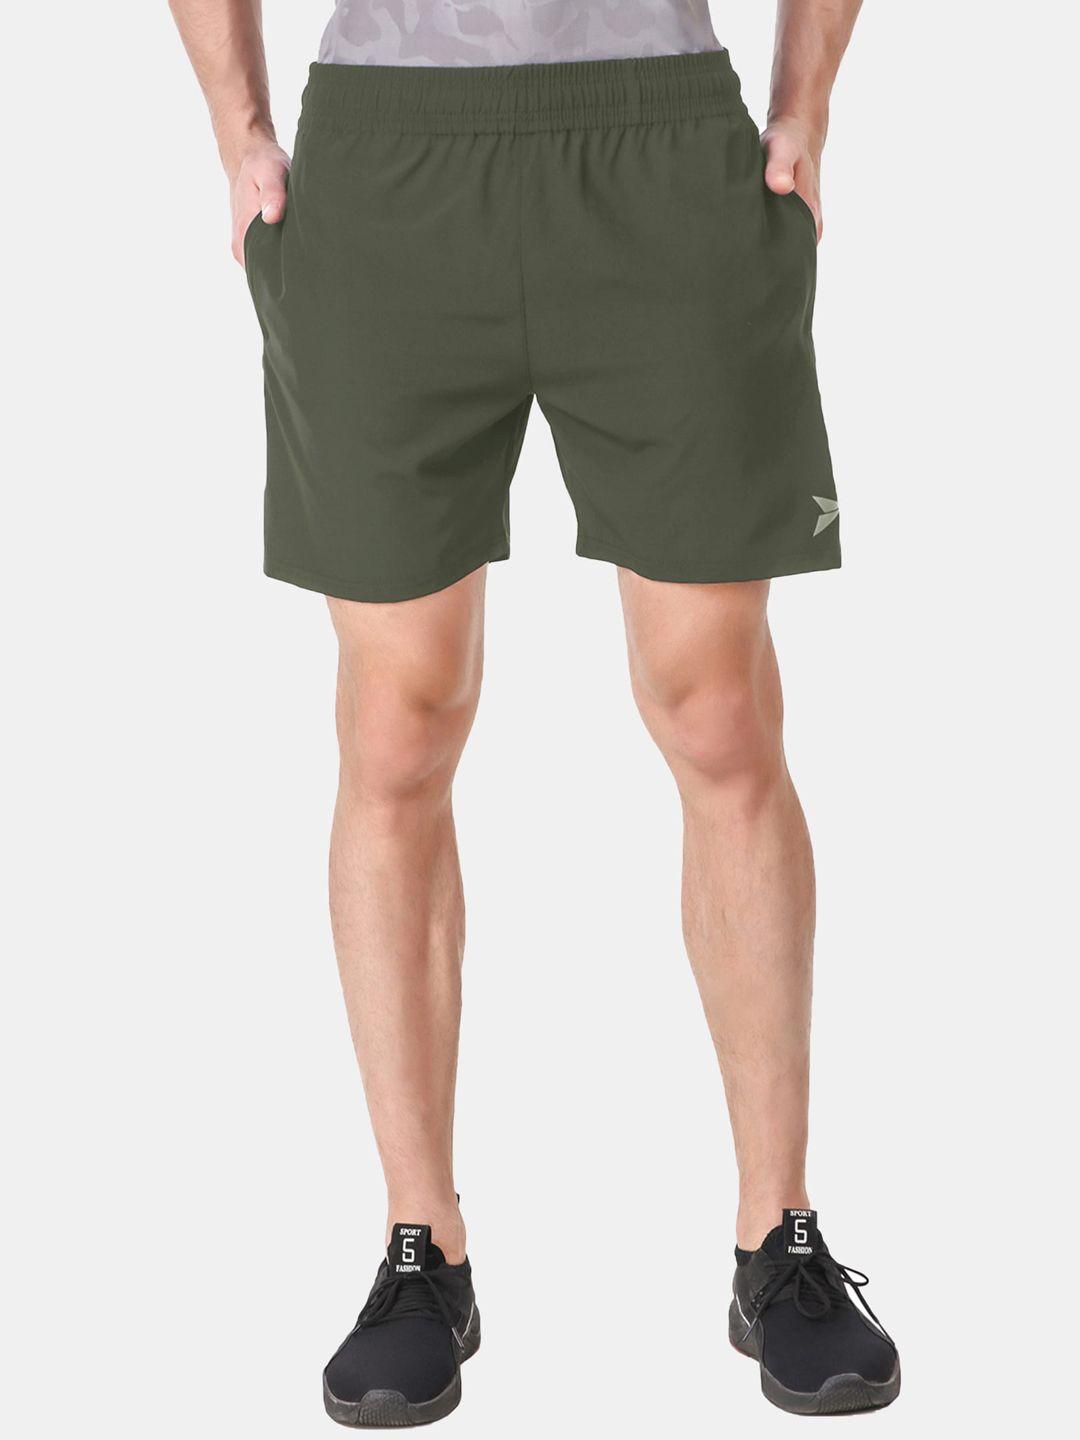 fitinc men green slim fit running sports shorts